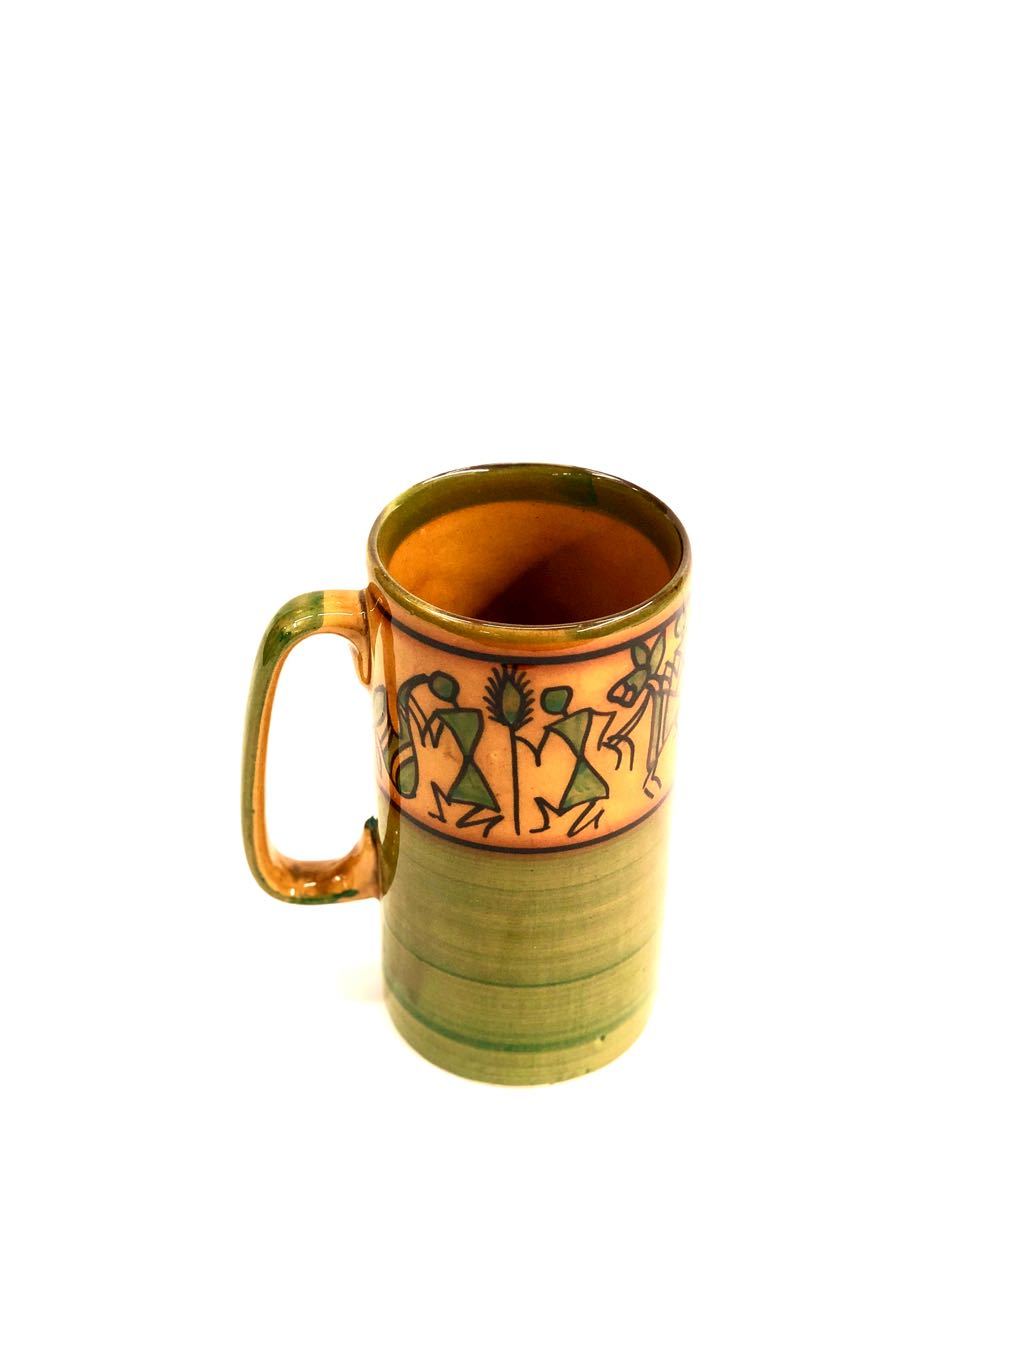 Ceramic Warli Painted Mugs Glossy & Beautiful For Beverages Tamrapatra